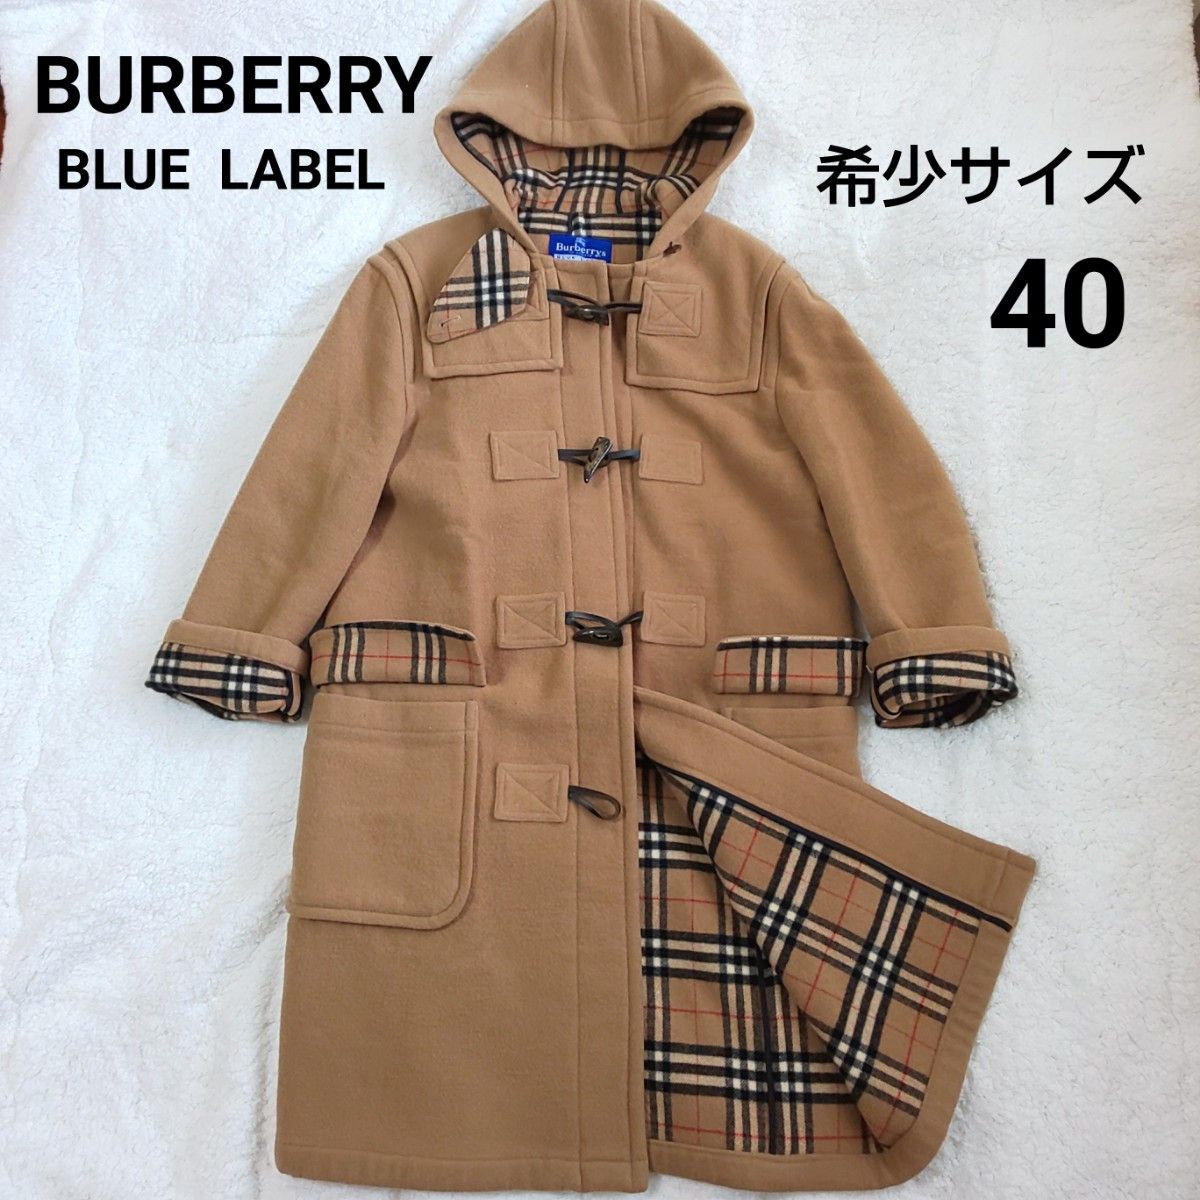 Burberry blue label ベスト ノバチェック L - トップス